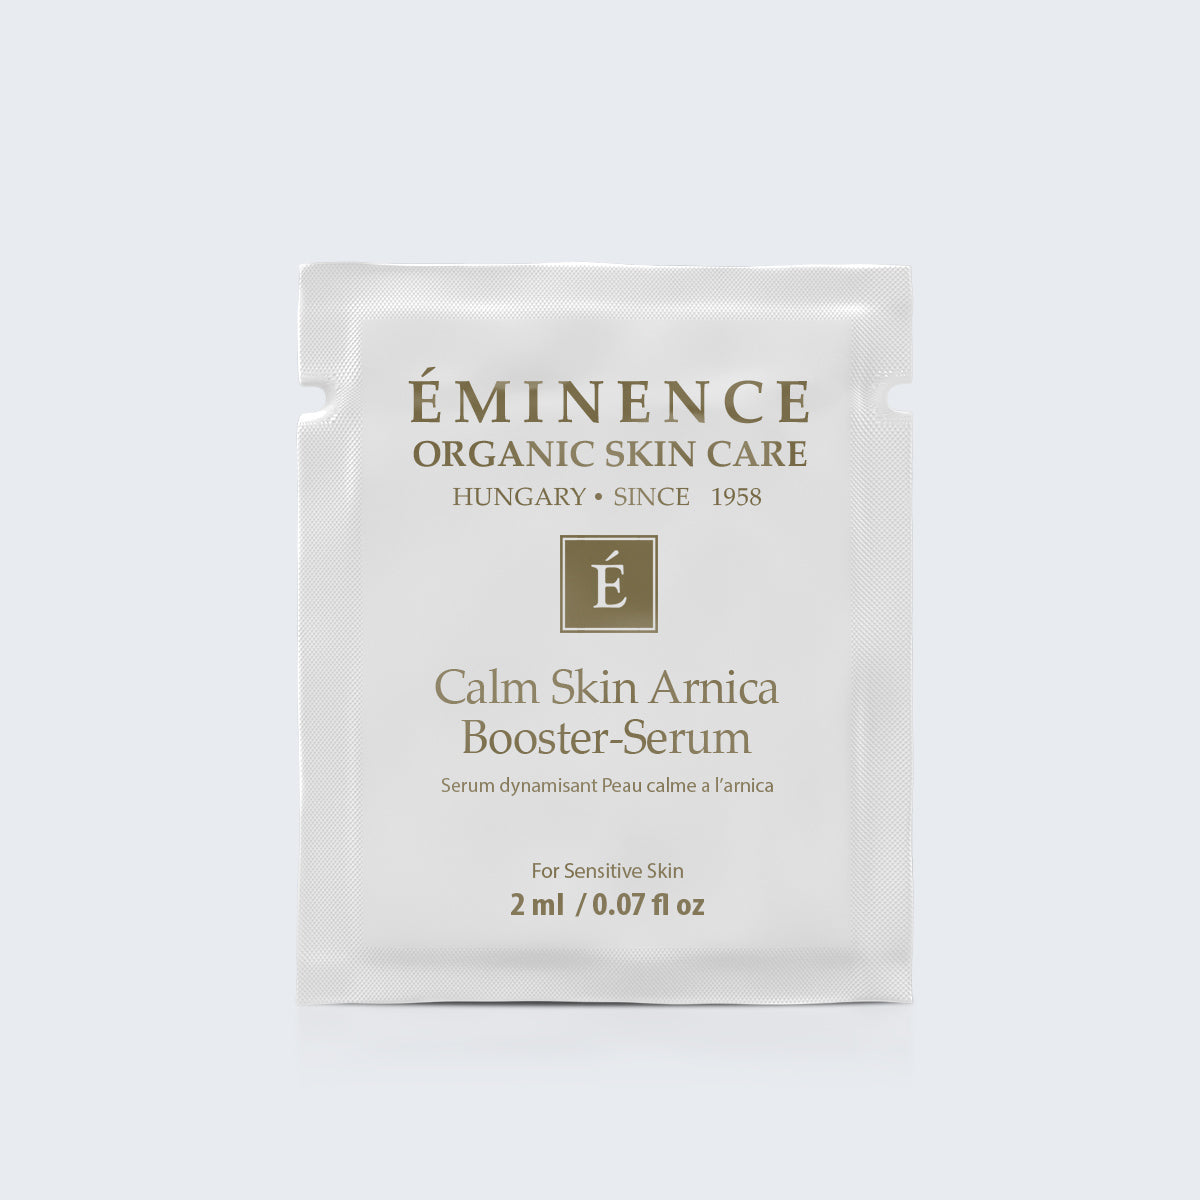 Eminence Organics Calm Skin Arnica Booster-Serum Card Sample